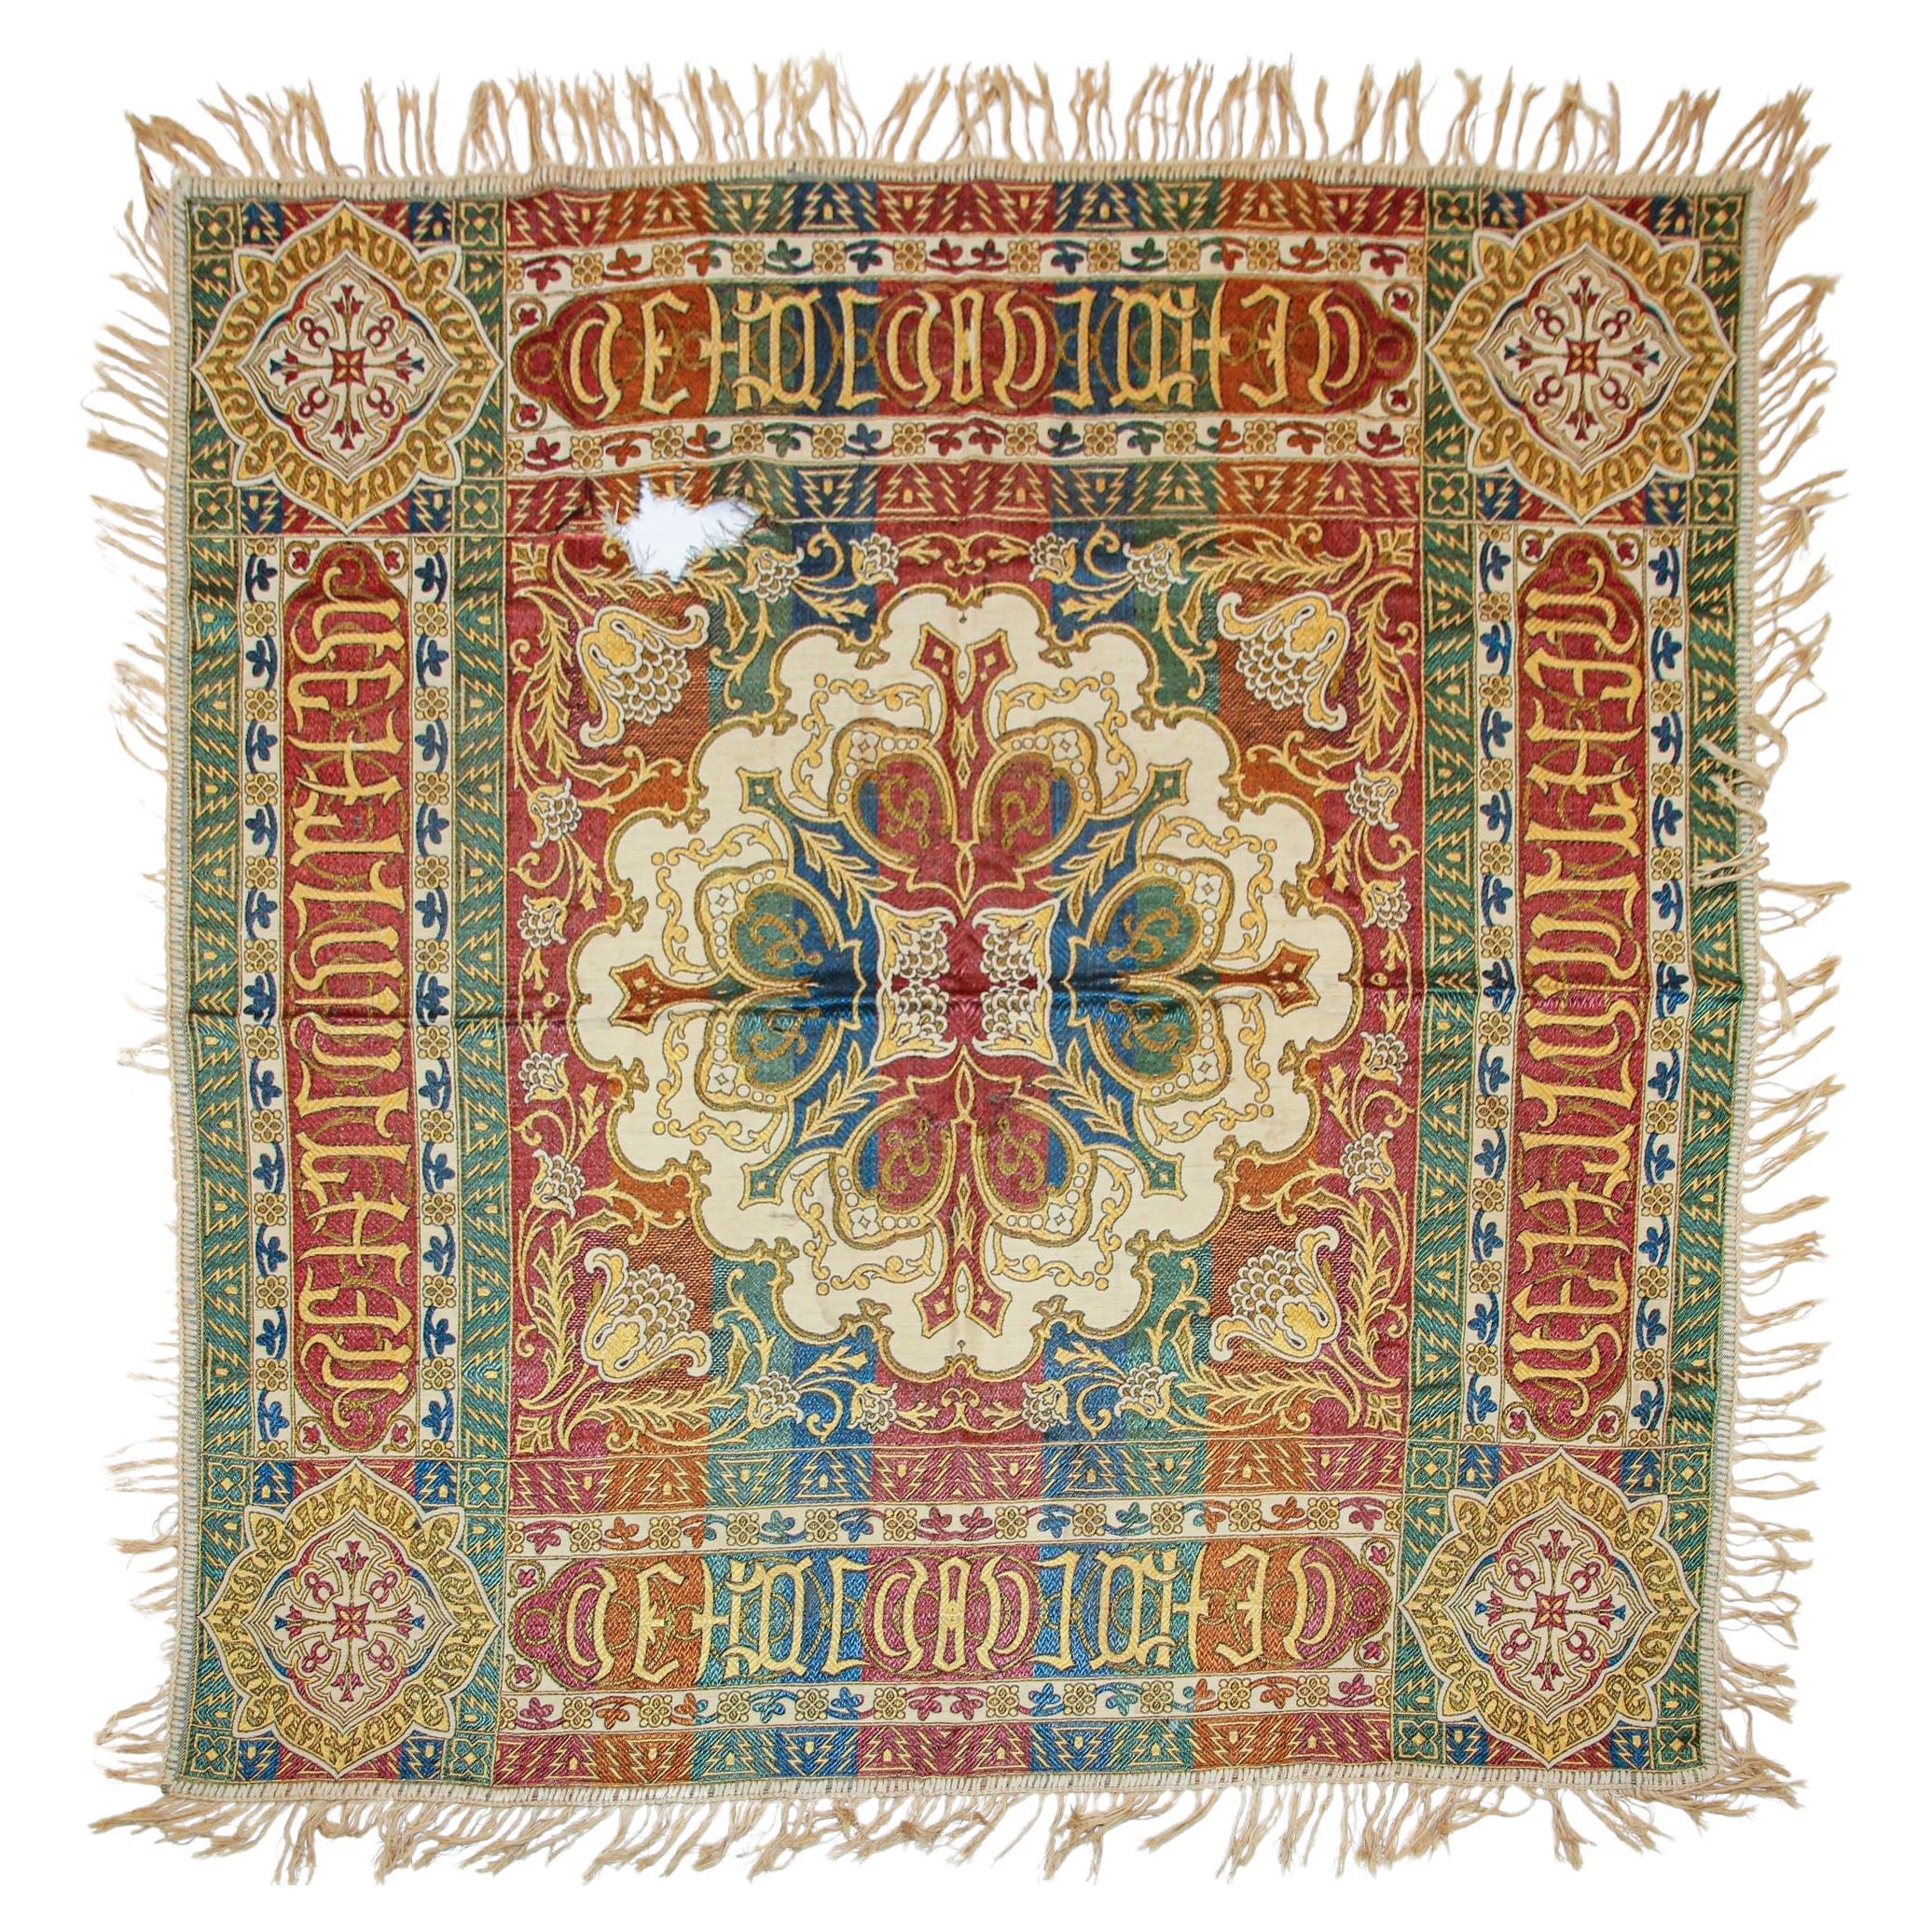 Antique Islamic Textile with Moorish Arabic Writing Granada Spain